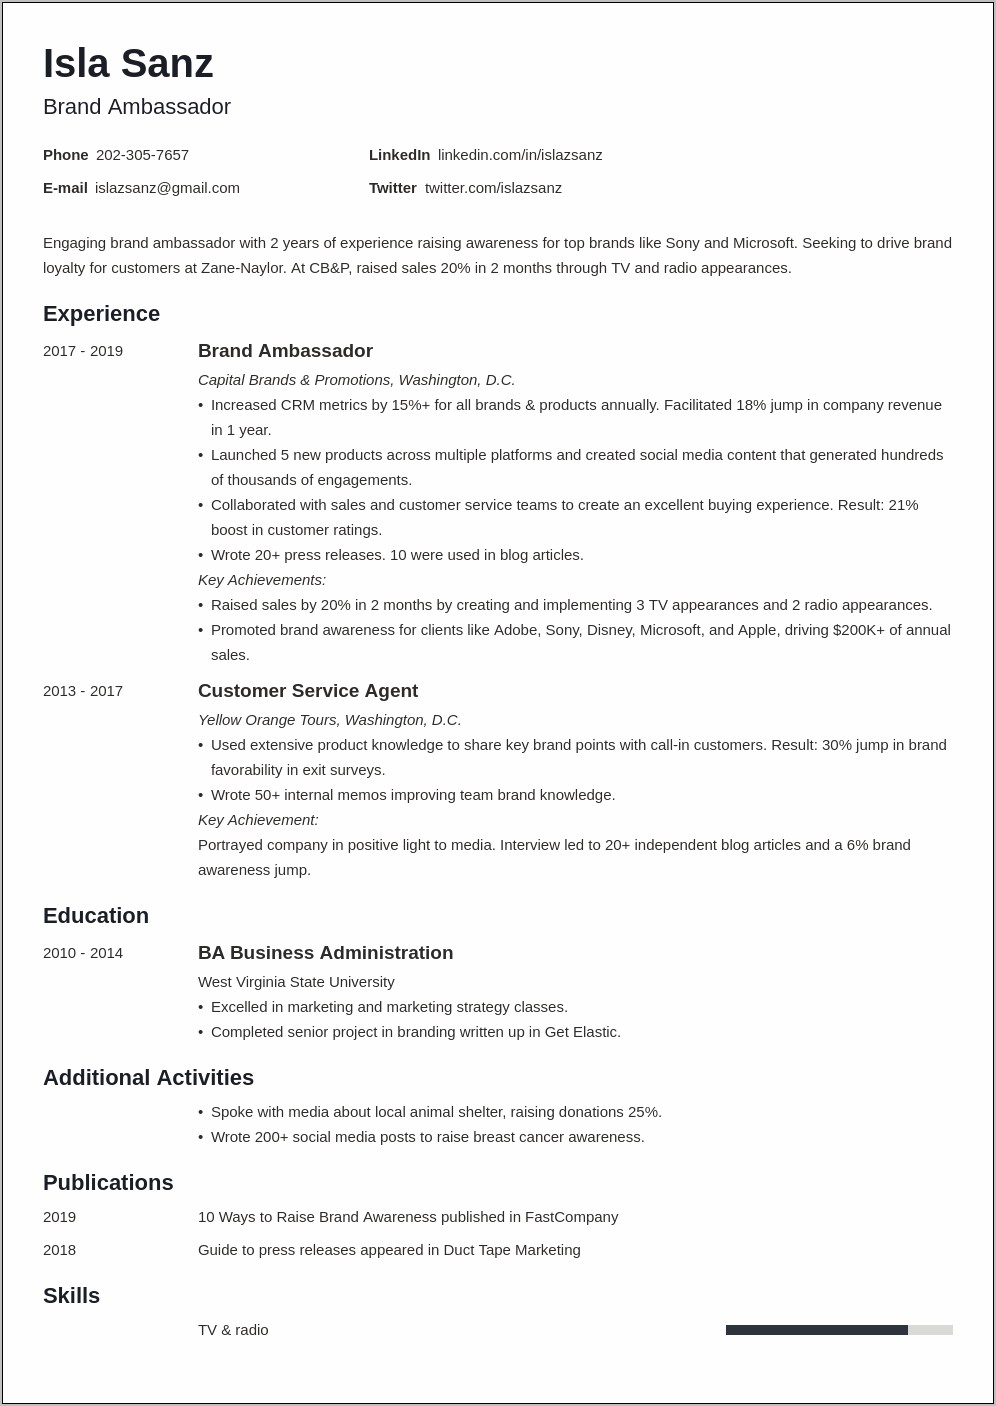 Sample Resume For Brand Ambassador